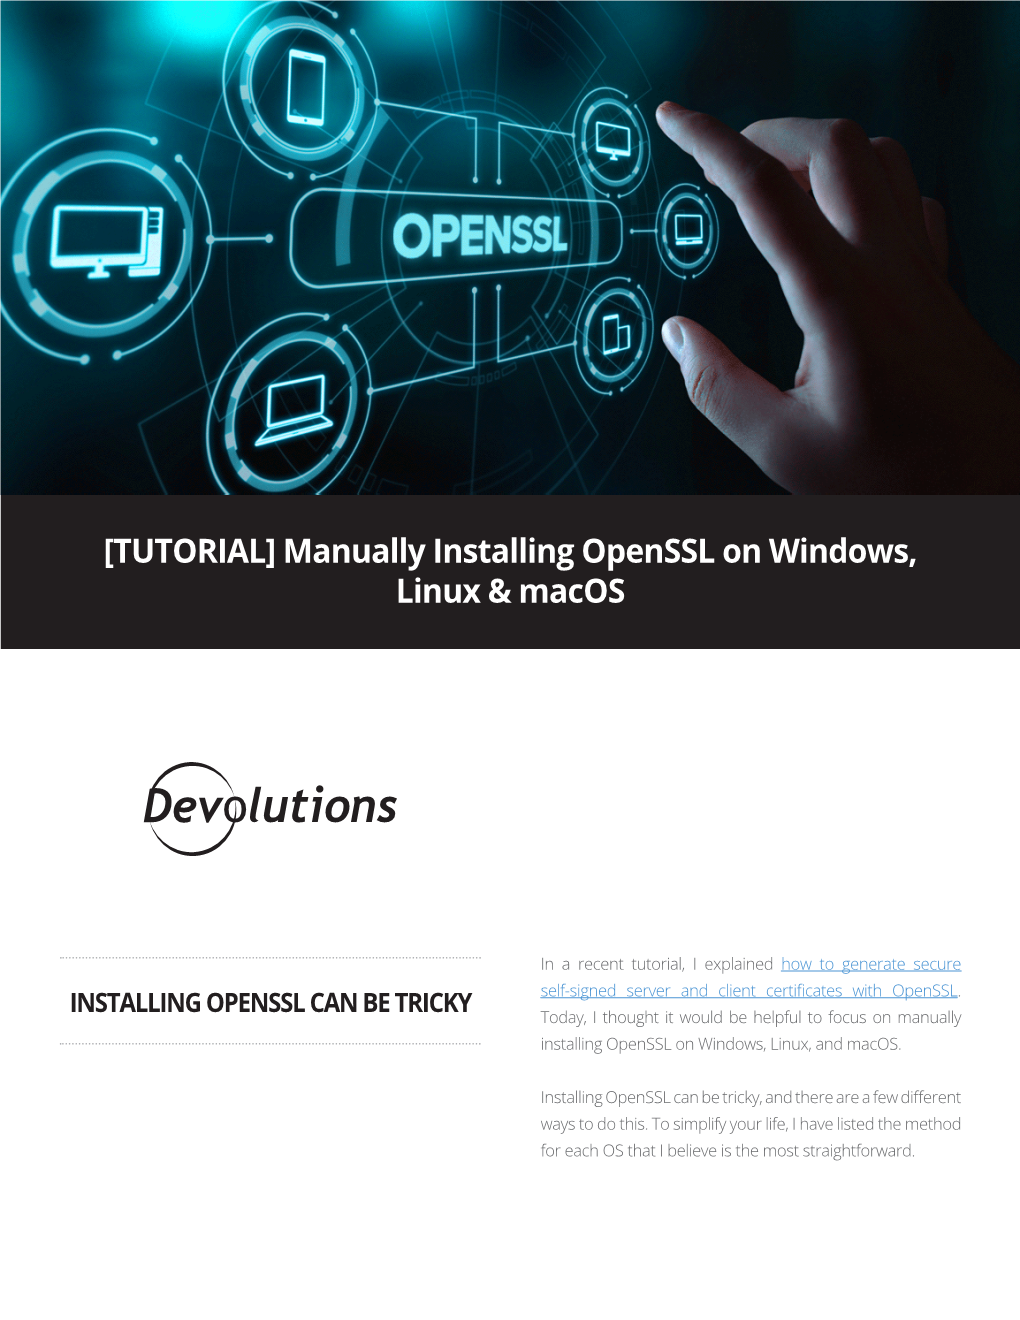 [TUTORIAL] Manually Installing Openssl on Windows, Linux & Macos